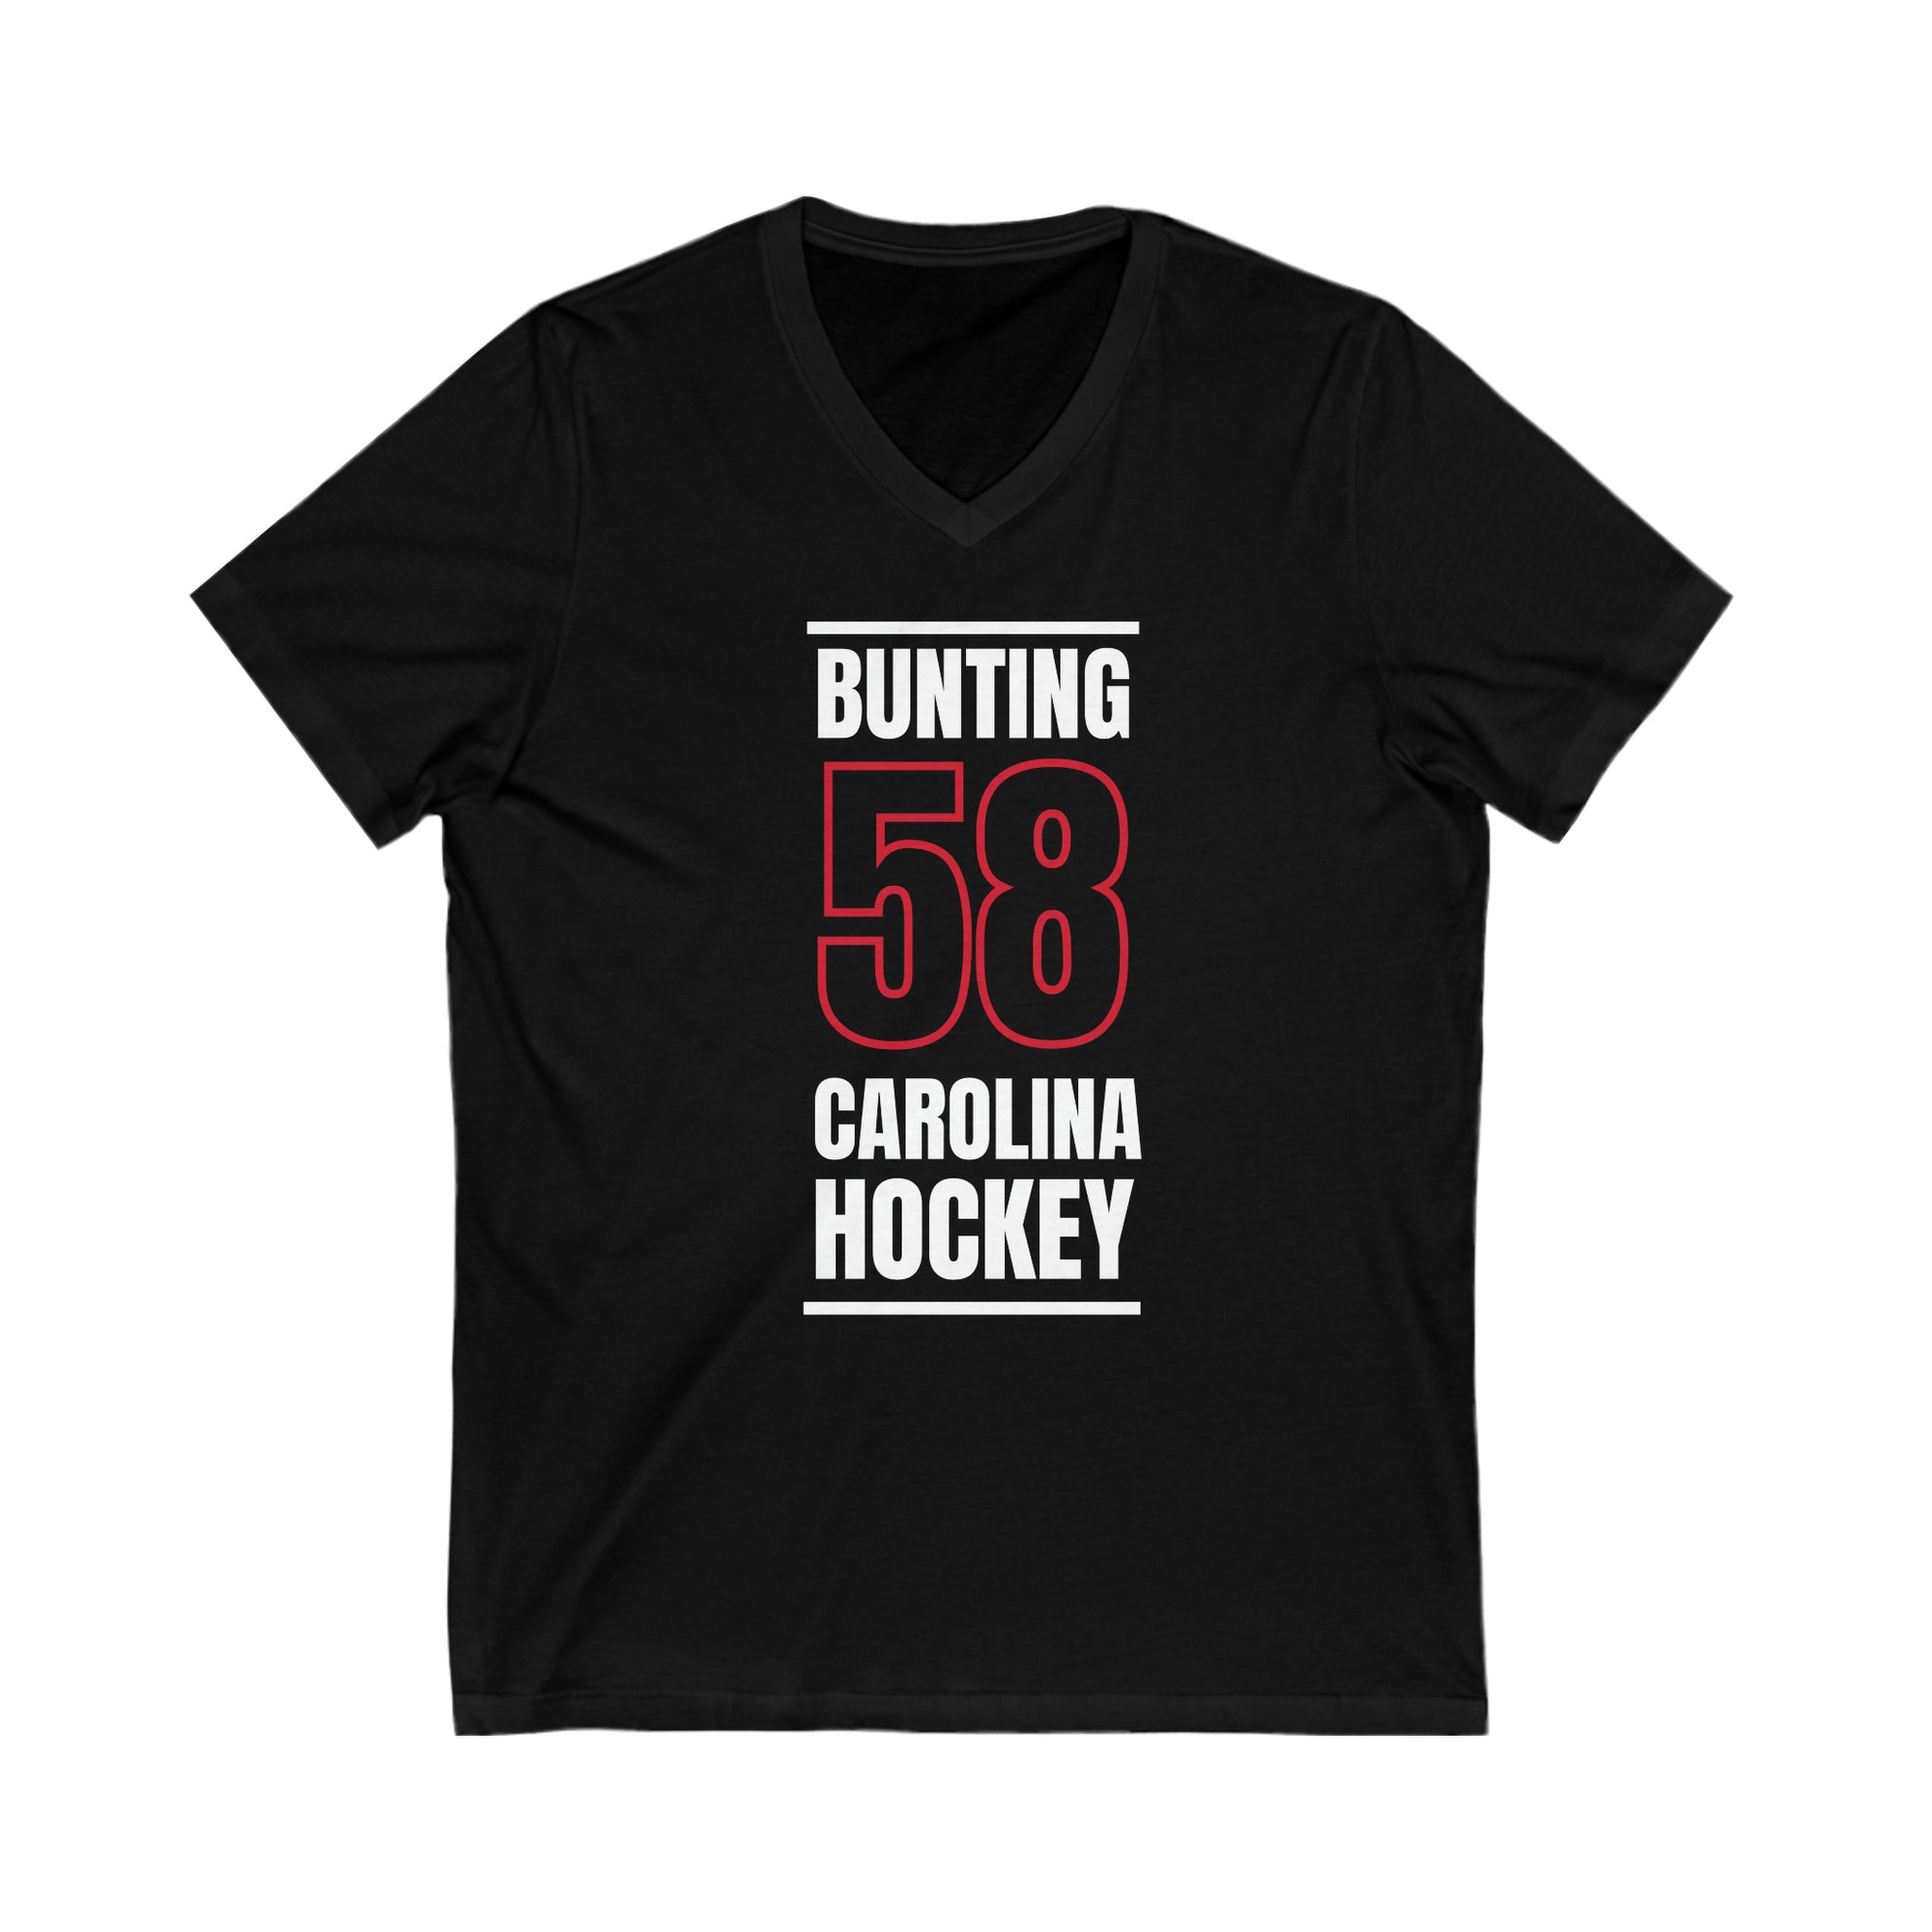 Bunting 58 Carolina Hockey Black Vertical Design Unisex V-Neck Tee